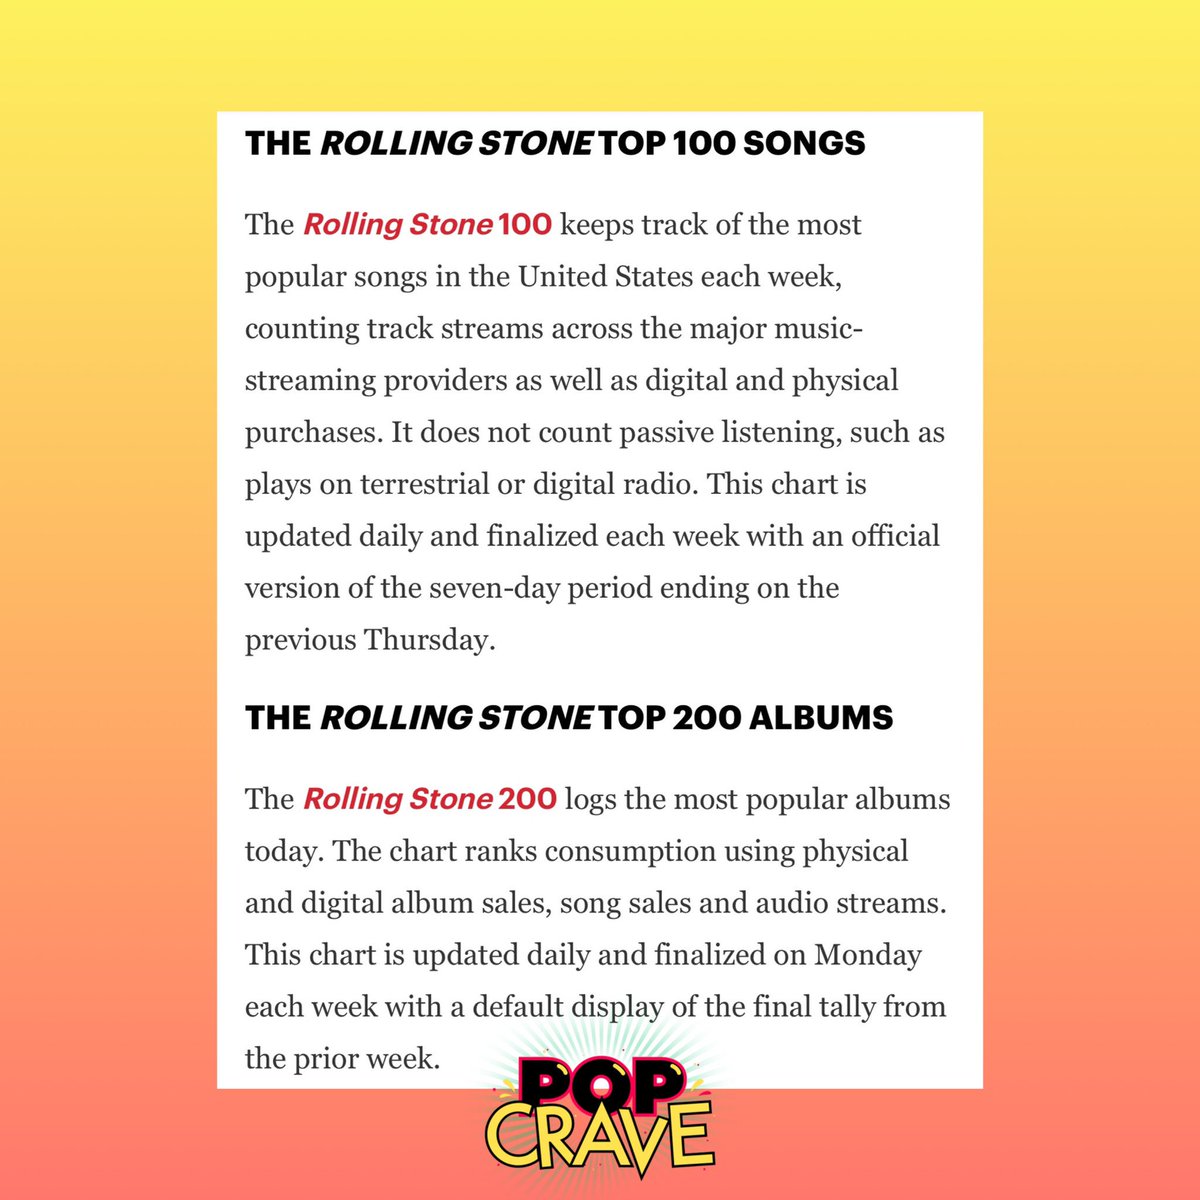 Top 100 Pop Music Charts